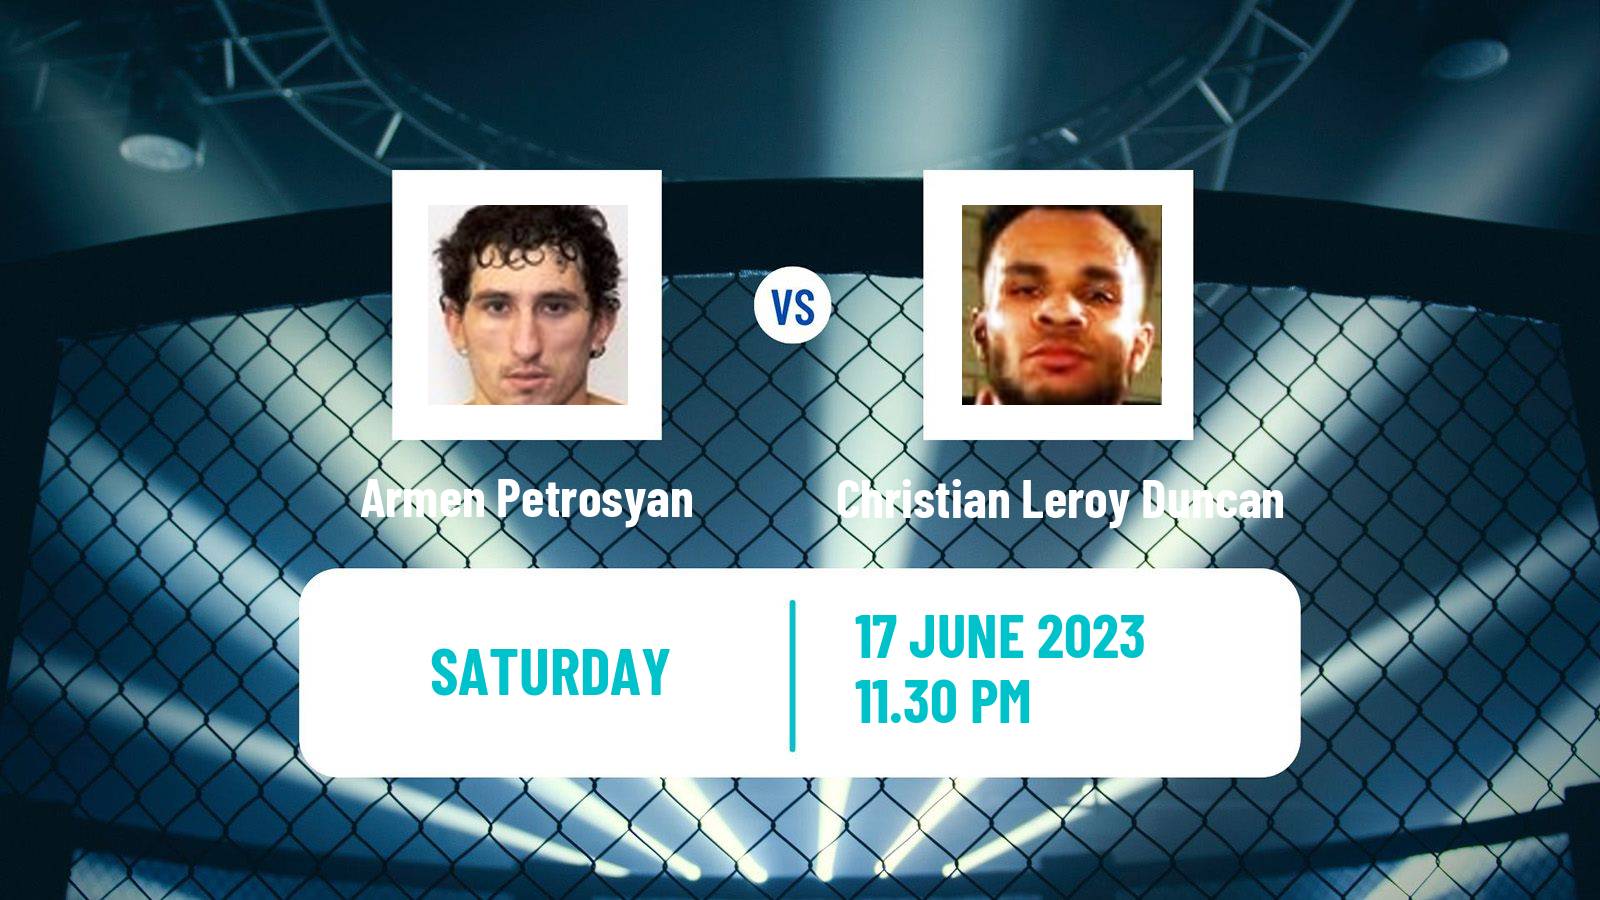 MMA Middleweight UFC Men Armen Petrosyan - Christian Leroy Duncan